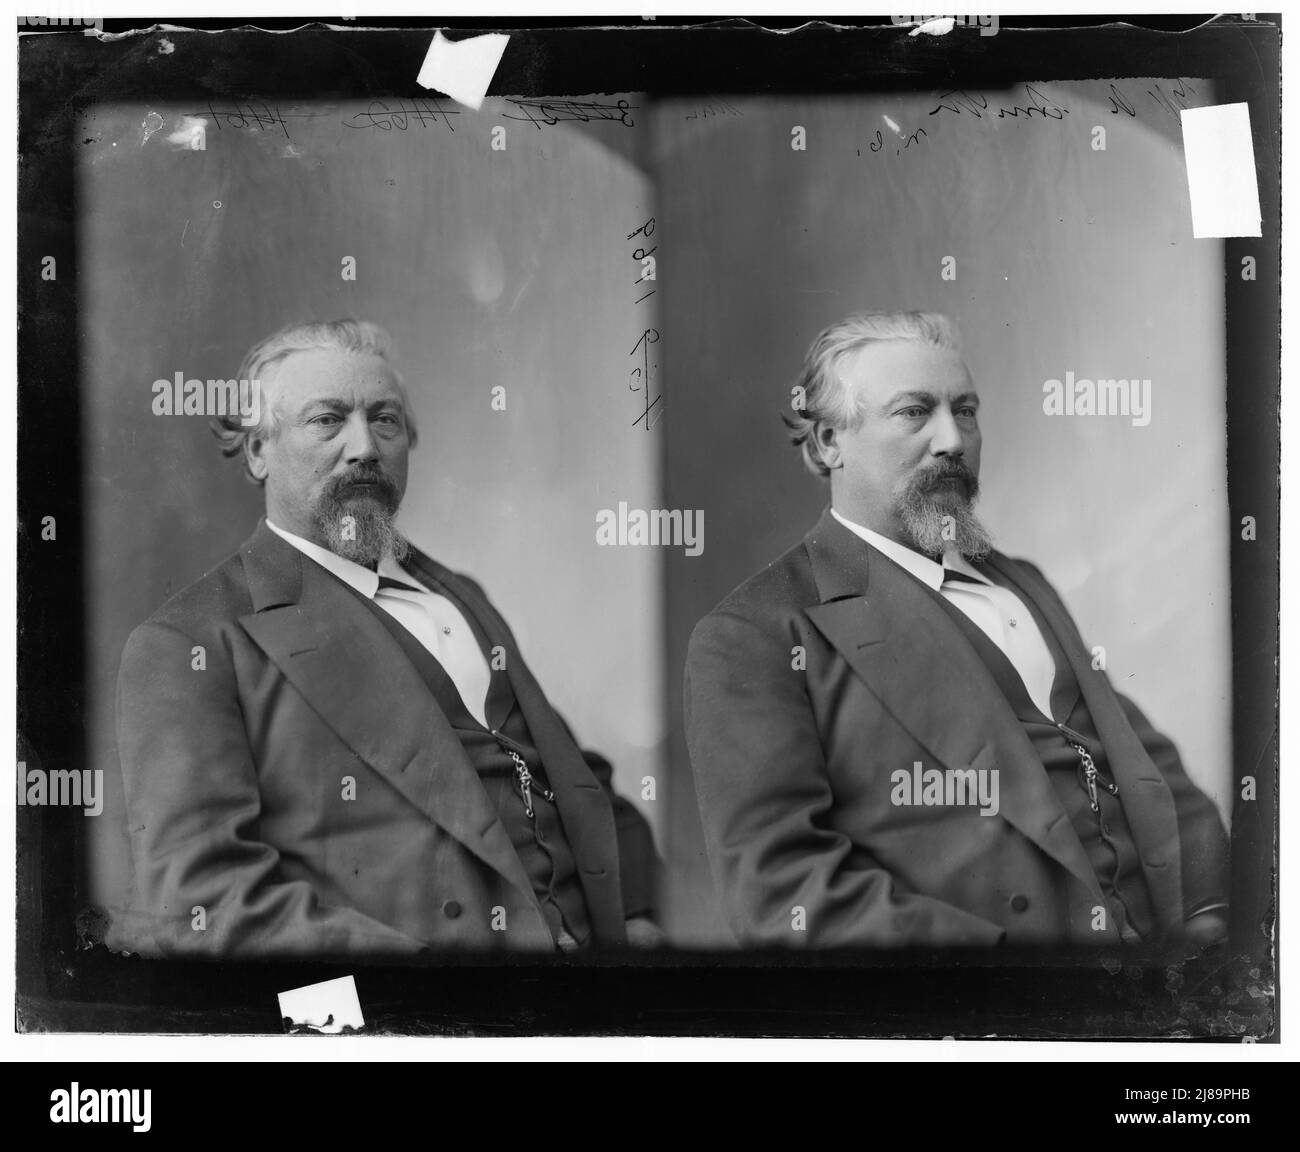 Smith, Hon. Wm. Alexander of North Carolina, between 1865 and 1880. Stock Photo